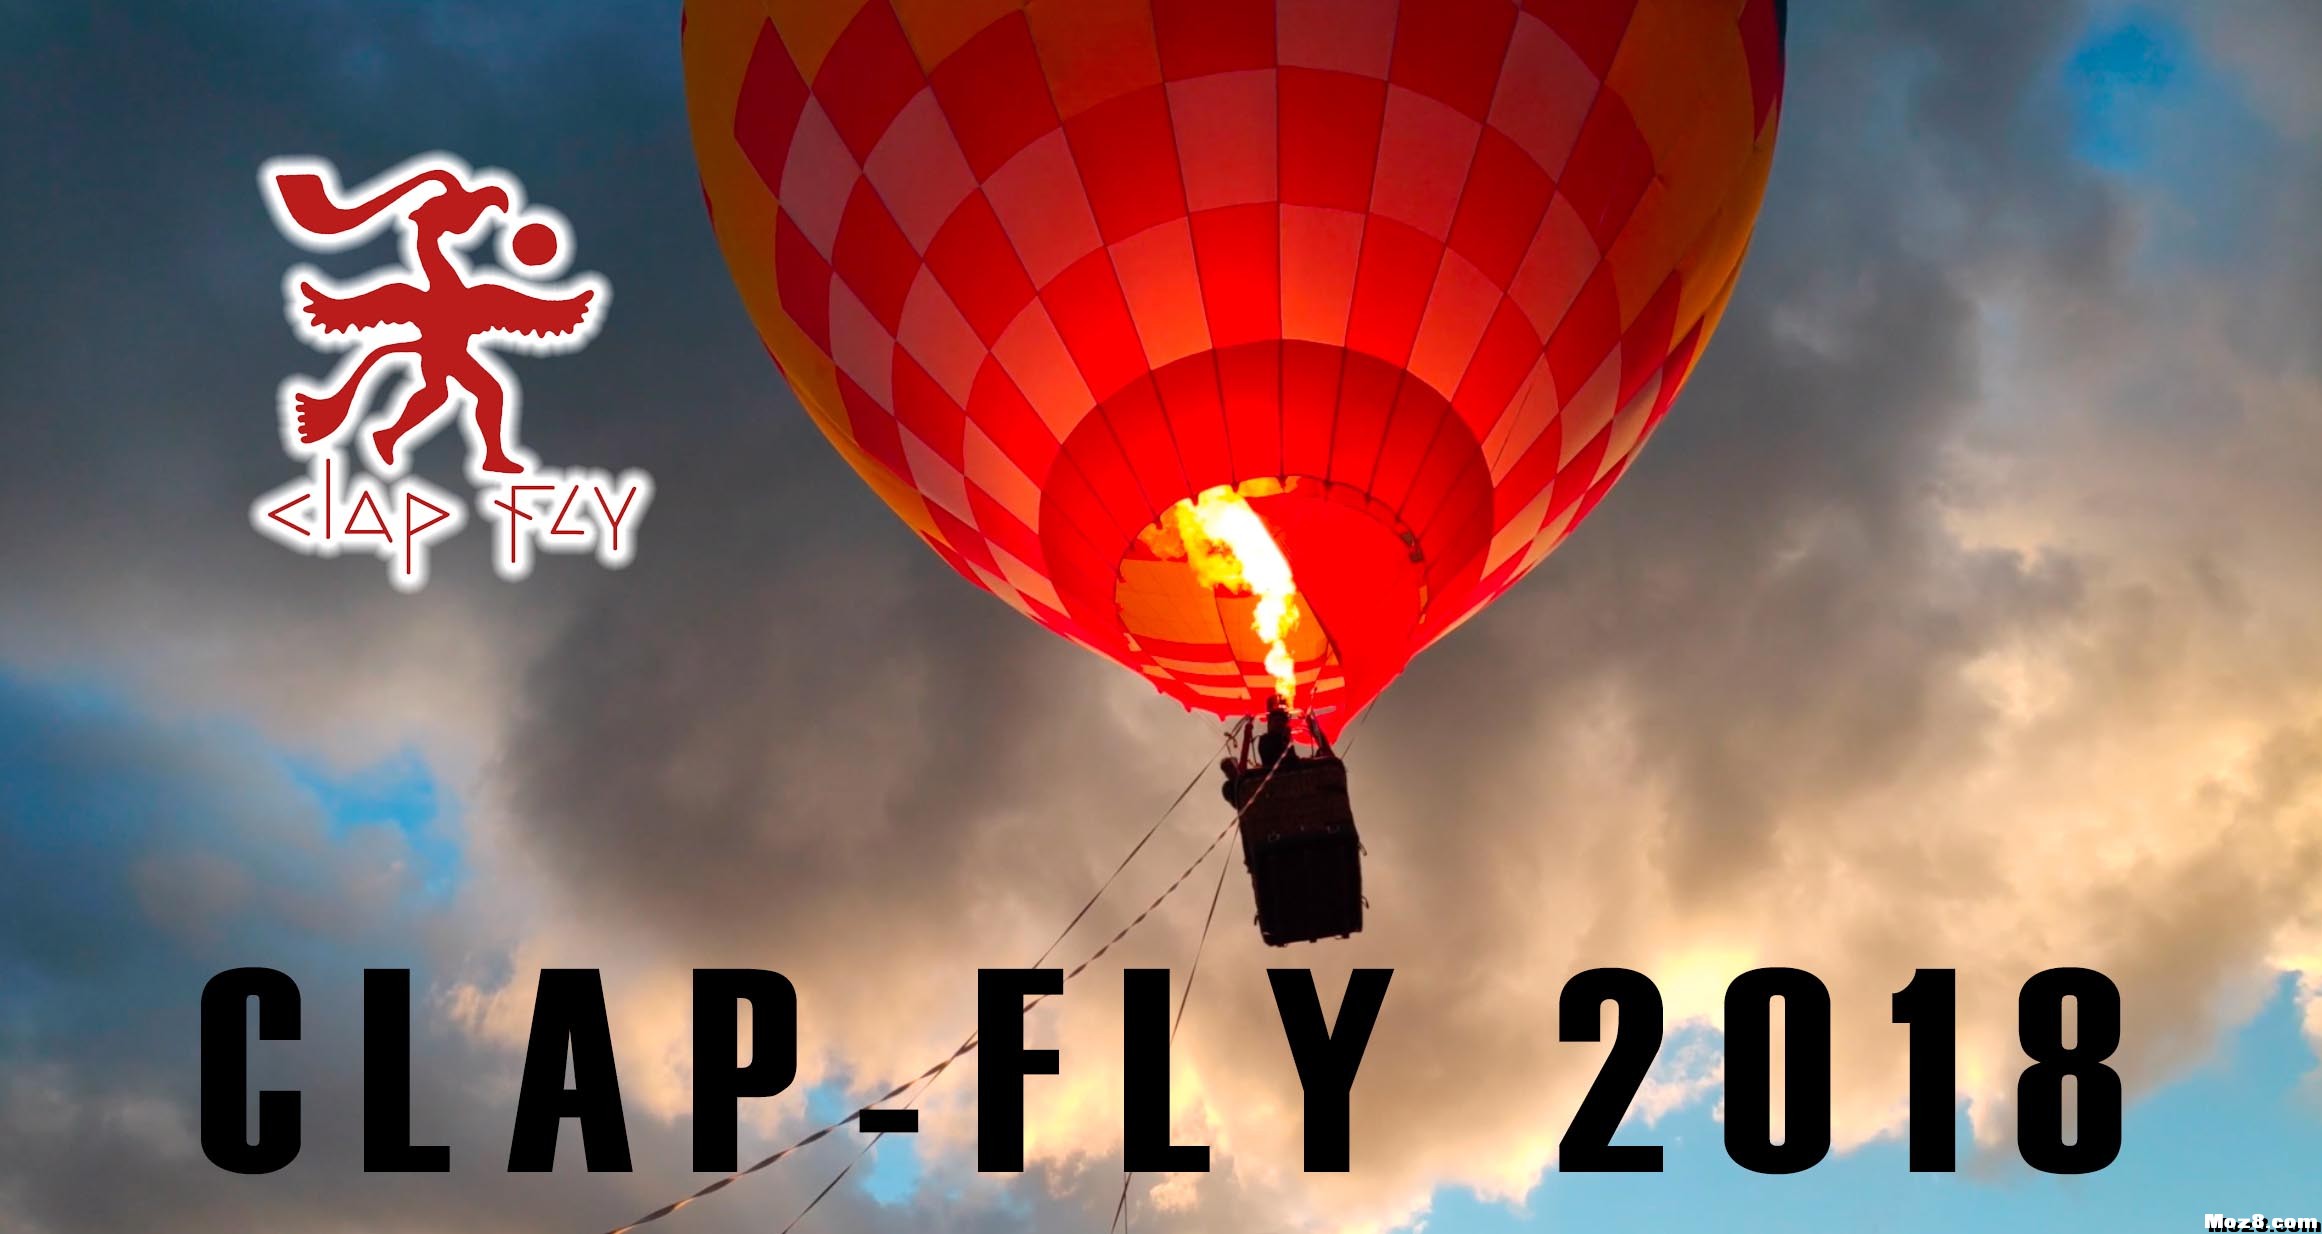 【CLAP-FlY】Clap-Fly 2018 飞行集锦 穿越机,aopa,2018年8633航班 作者:xiaopan1984 4578 